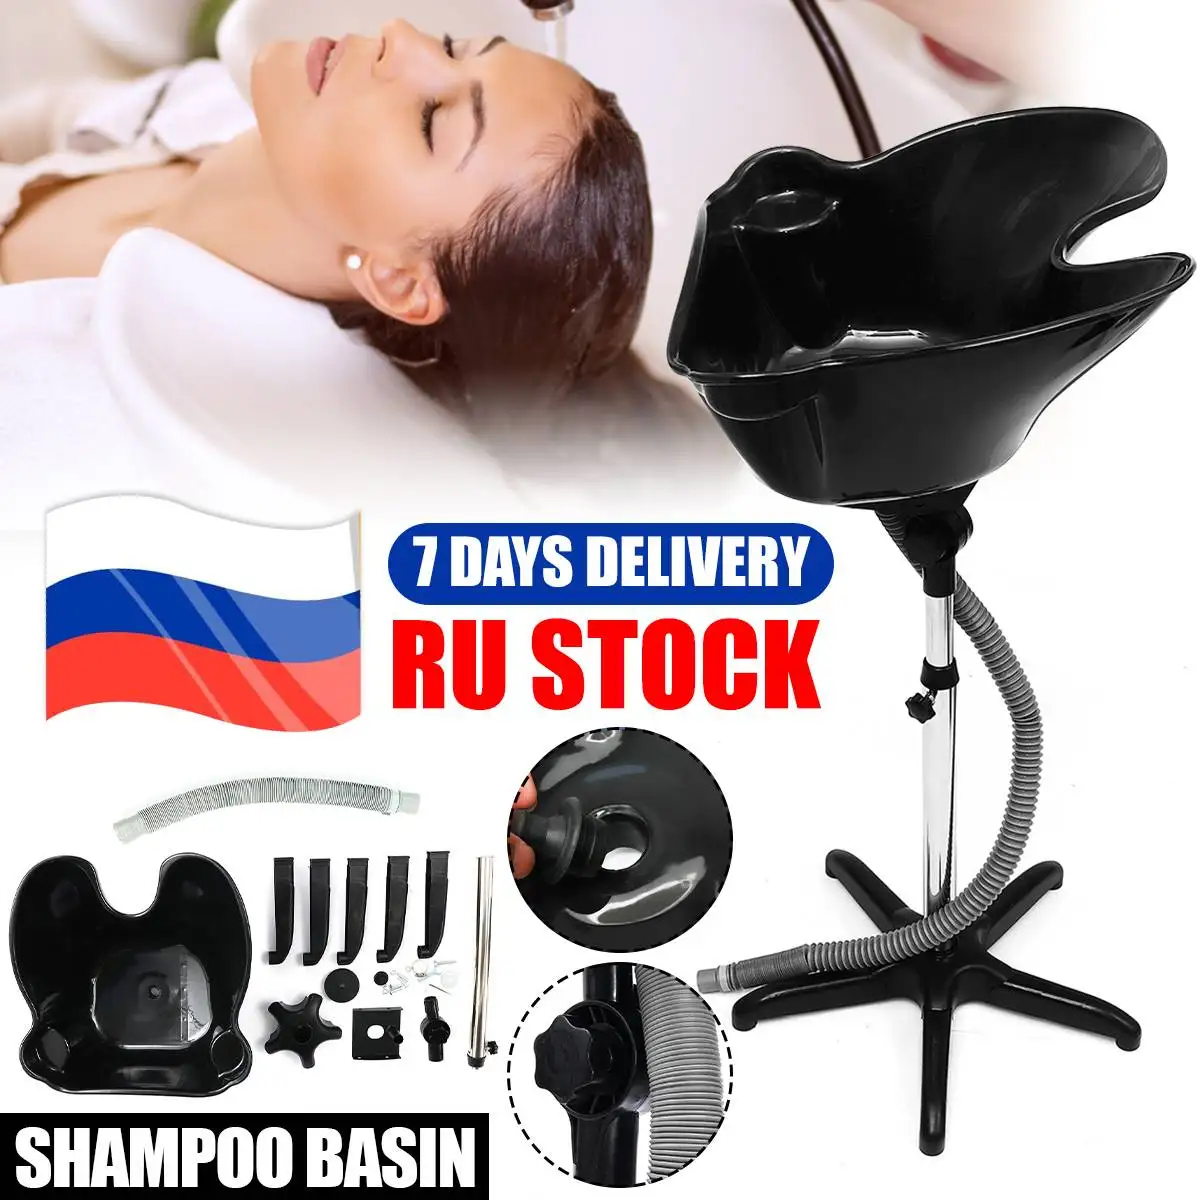 

Height Adjustable Hair Washing Salon Basin Shampoo Bowl Sink Drain Hose Stand Holder Home Bathroom Fixture for Sick Elder